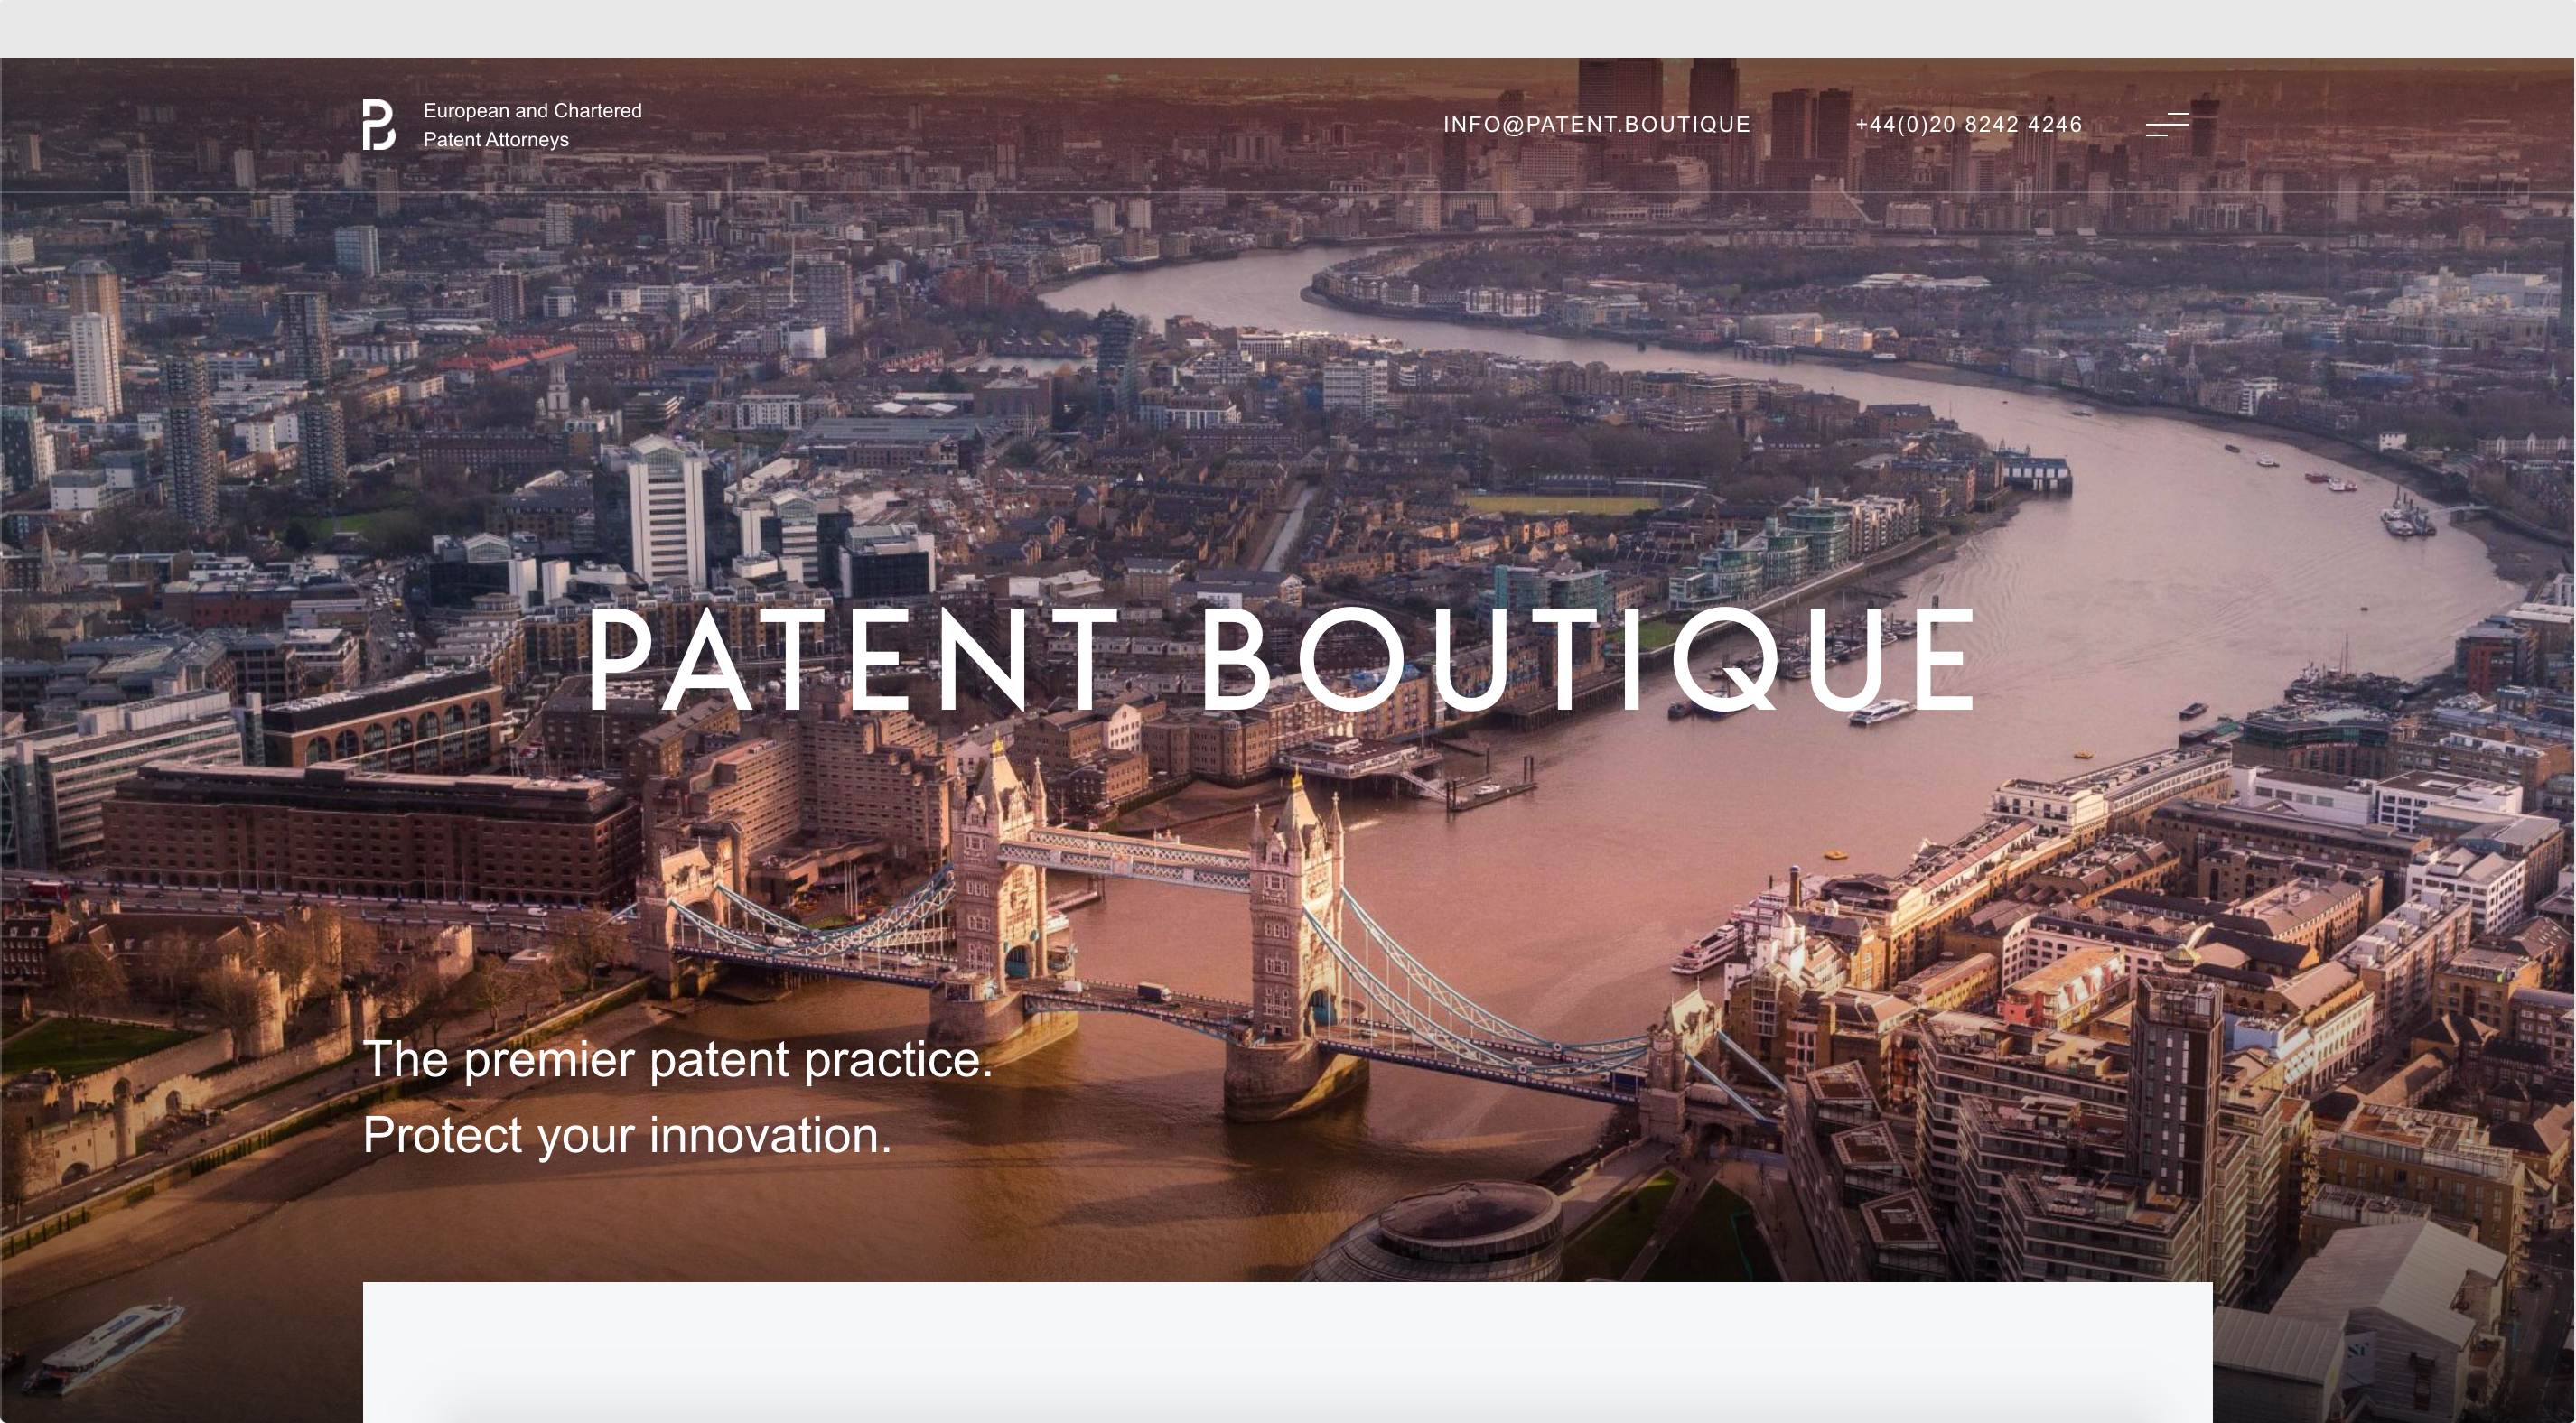 Patent Boutique - Featured image